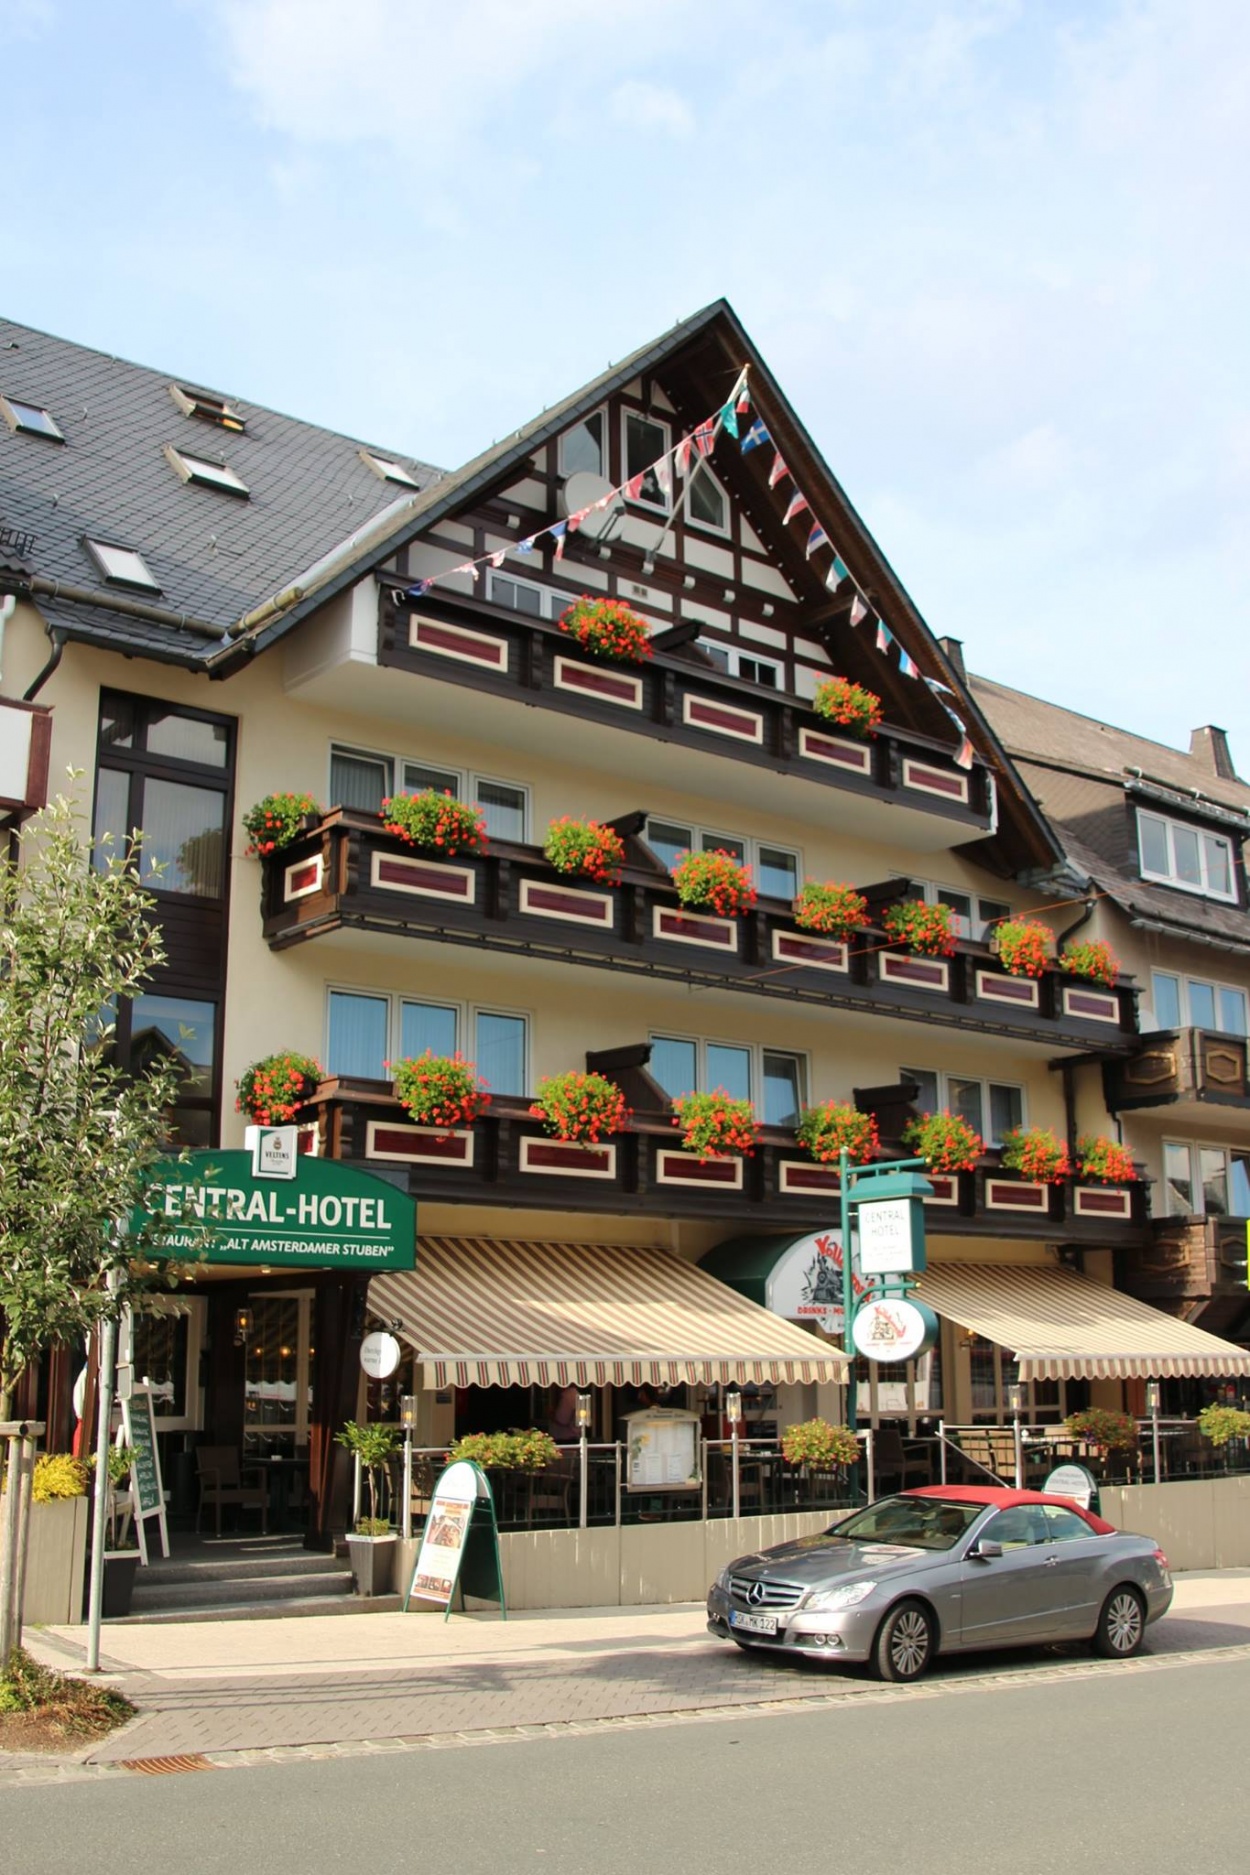  Central Hotel in Winterberg 